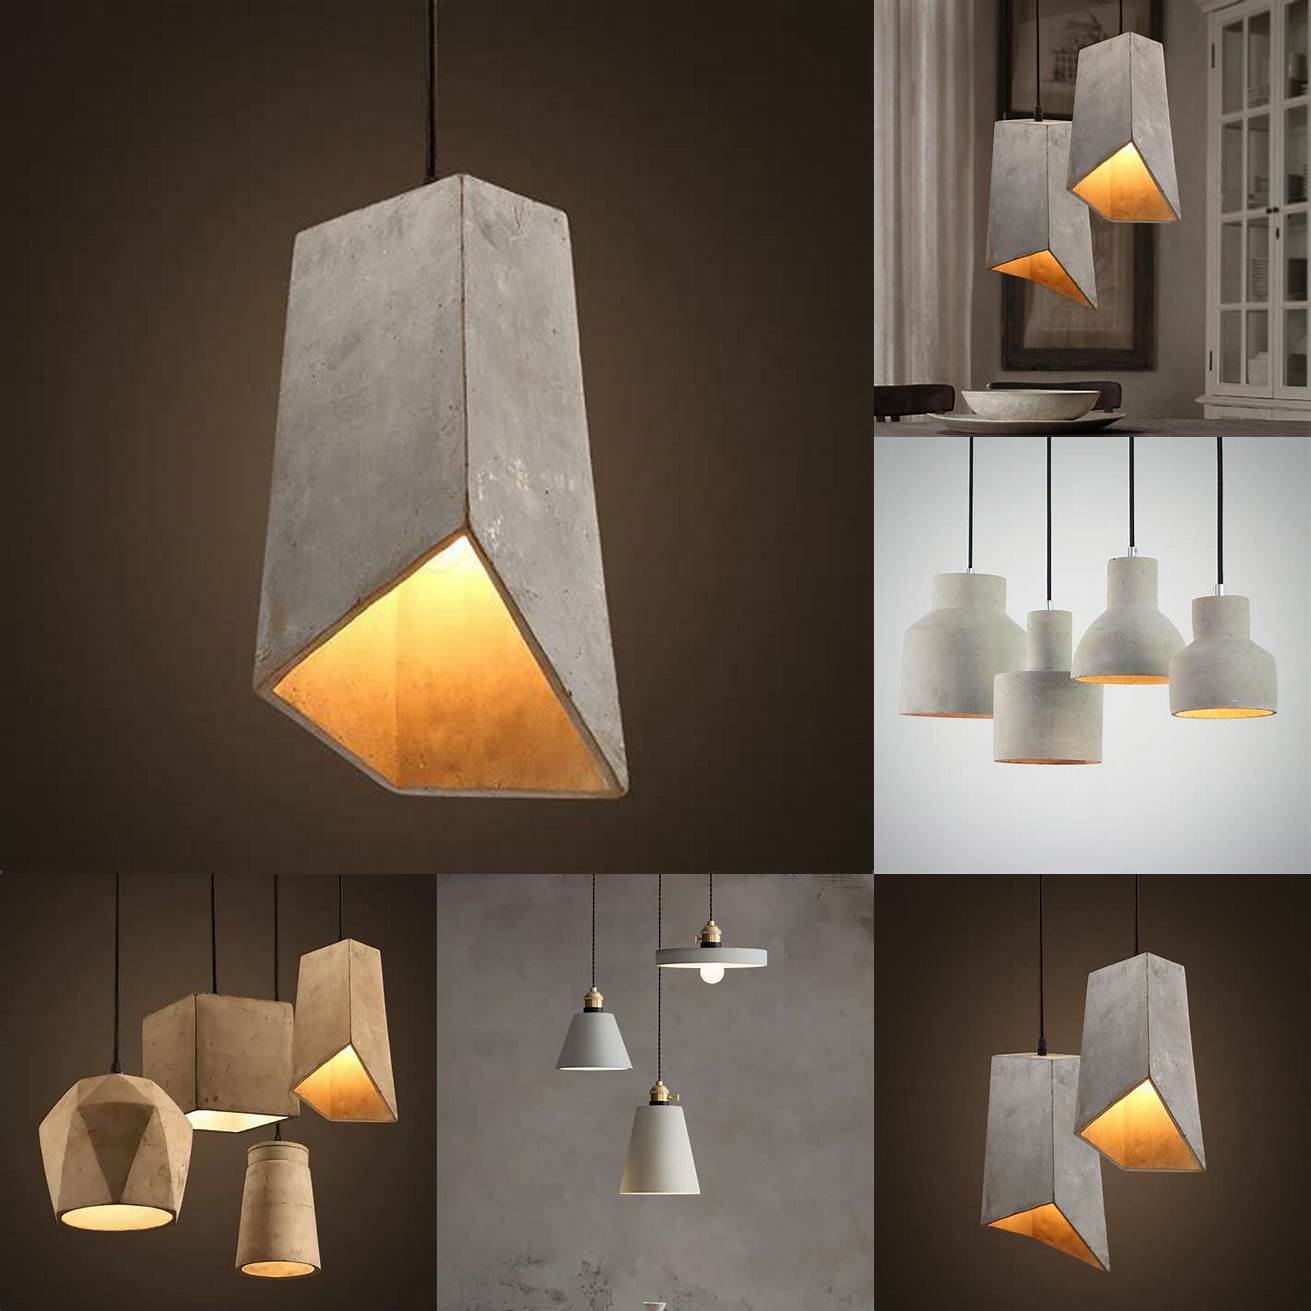 Minimalistic concrete pendant lights with geometric shapes